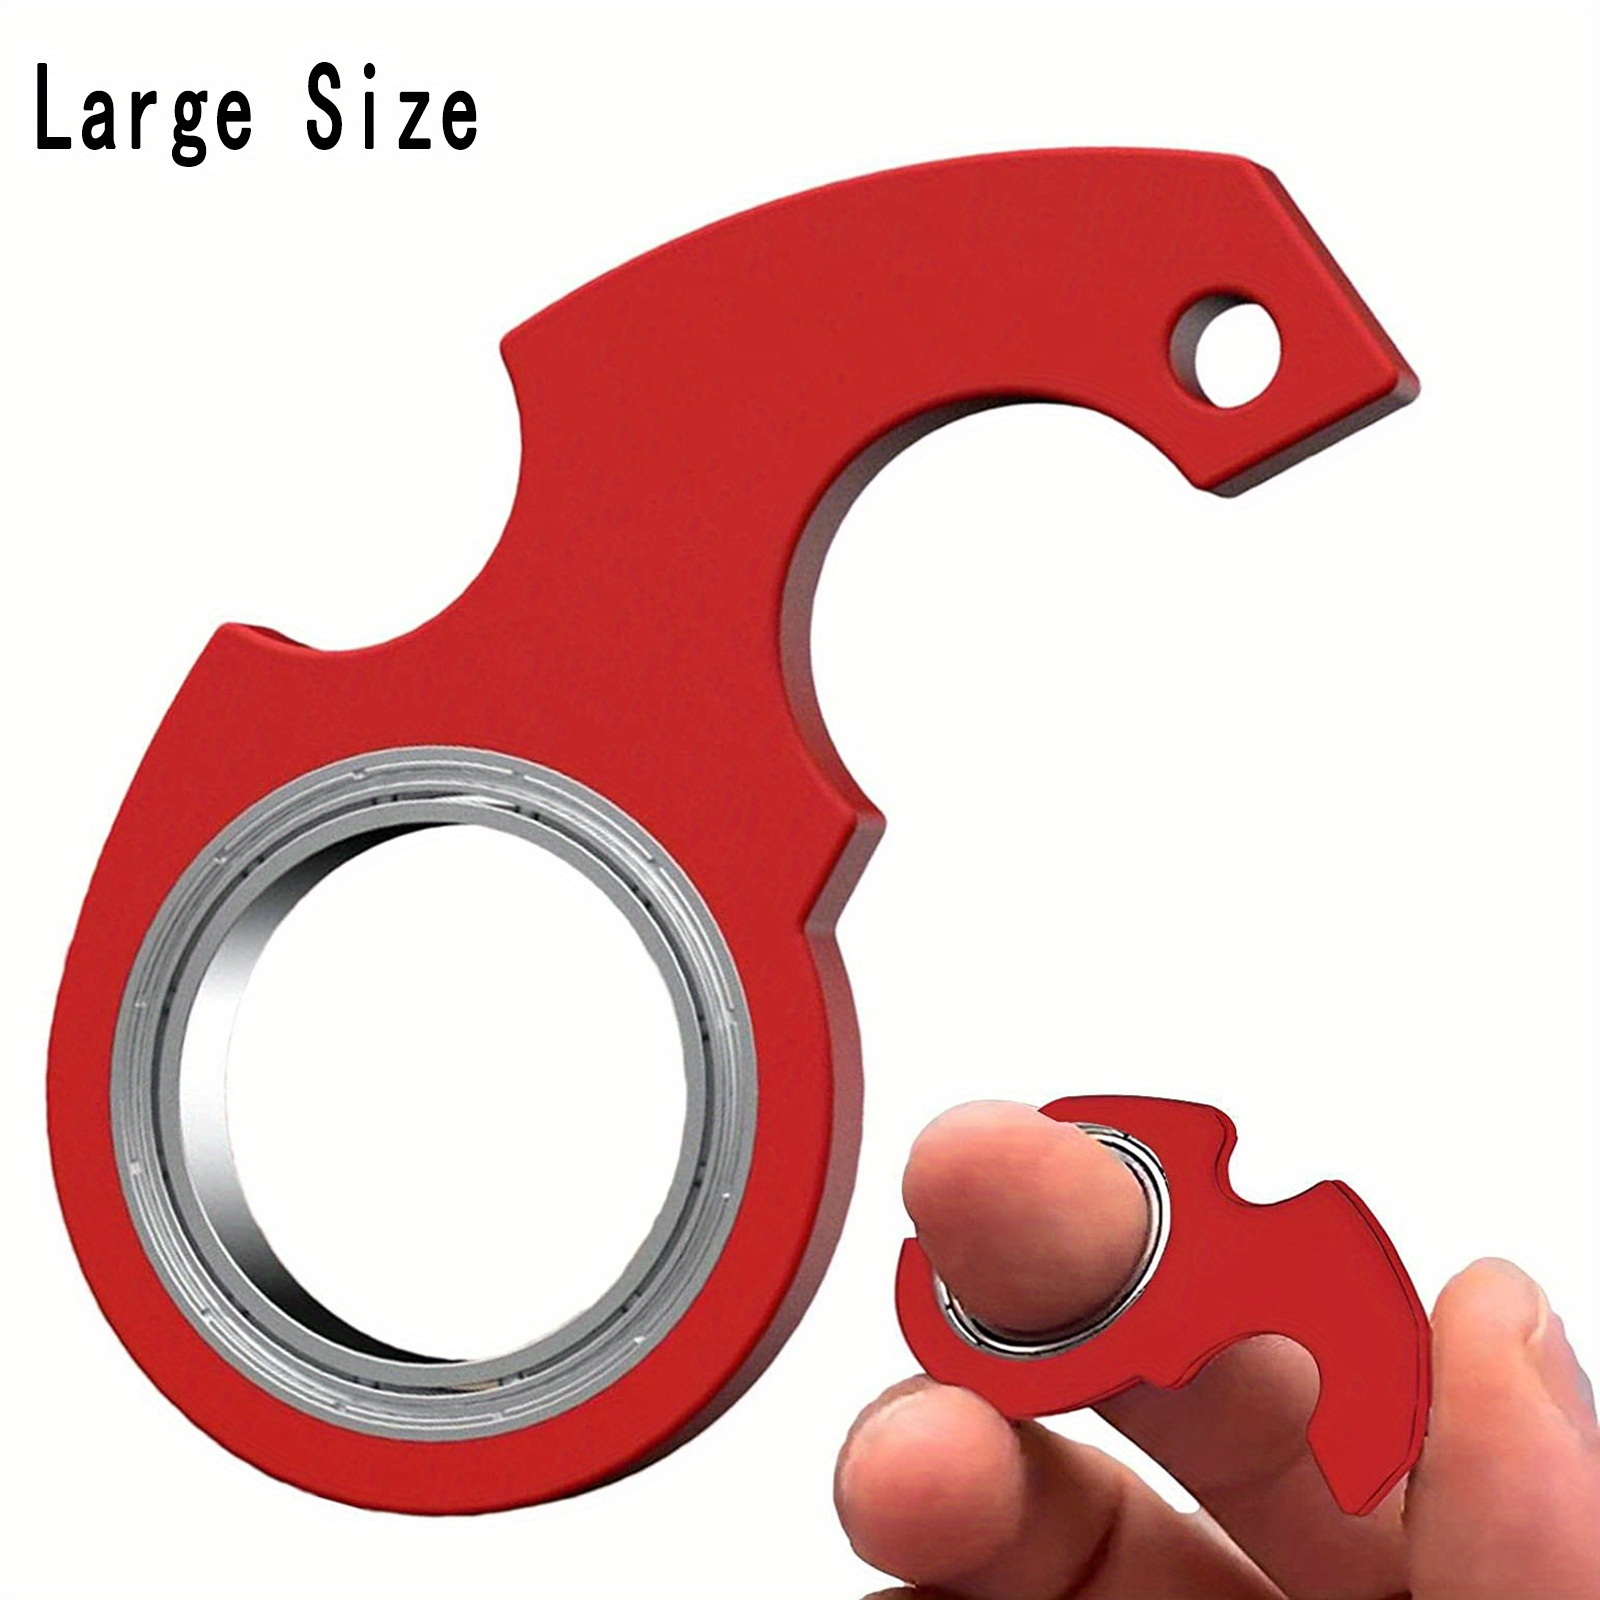 Red Fidget Keychain Spinner Toy For Finger Exercise - Portable